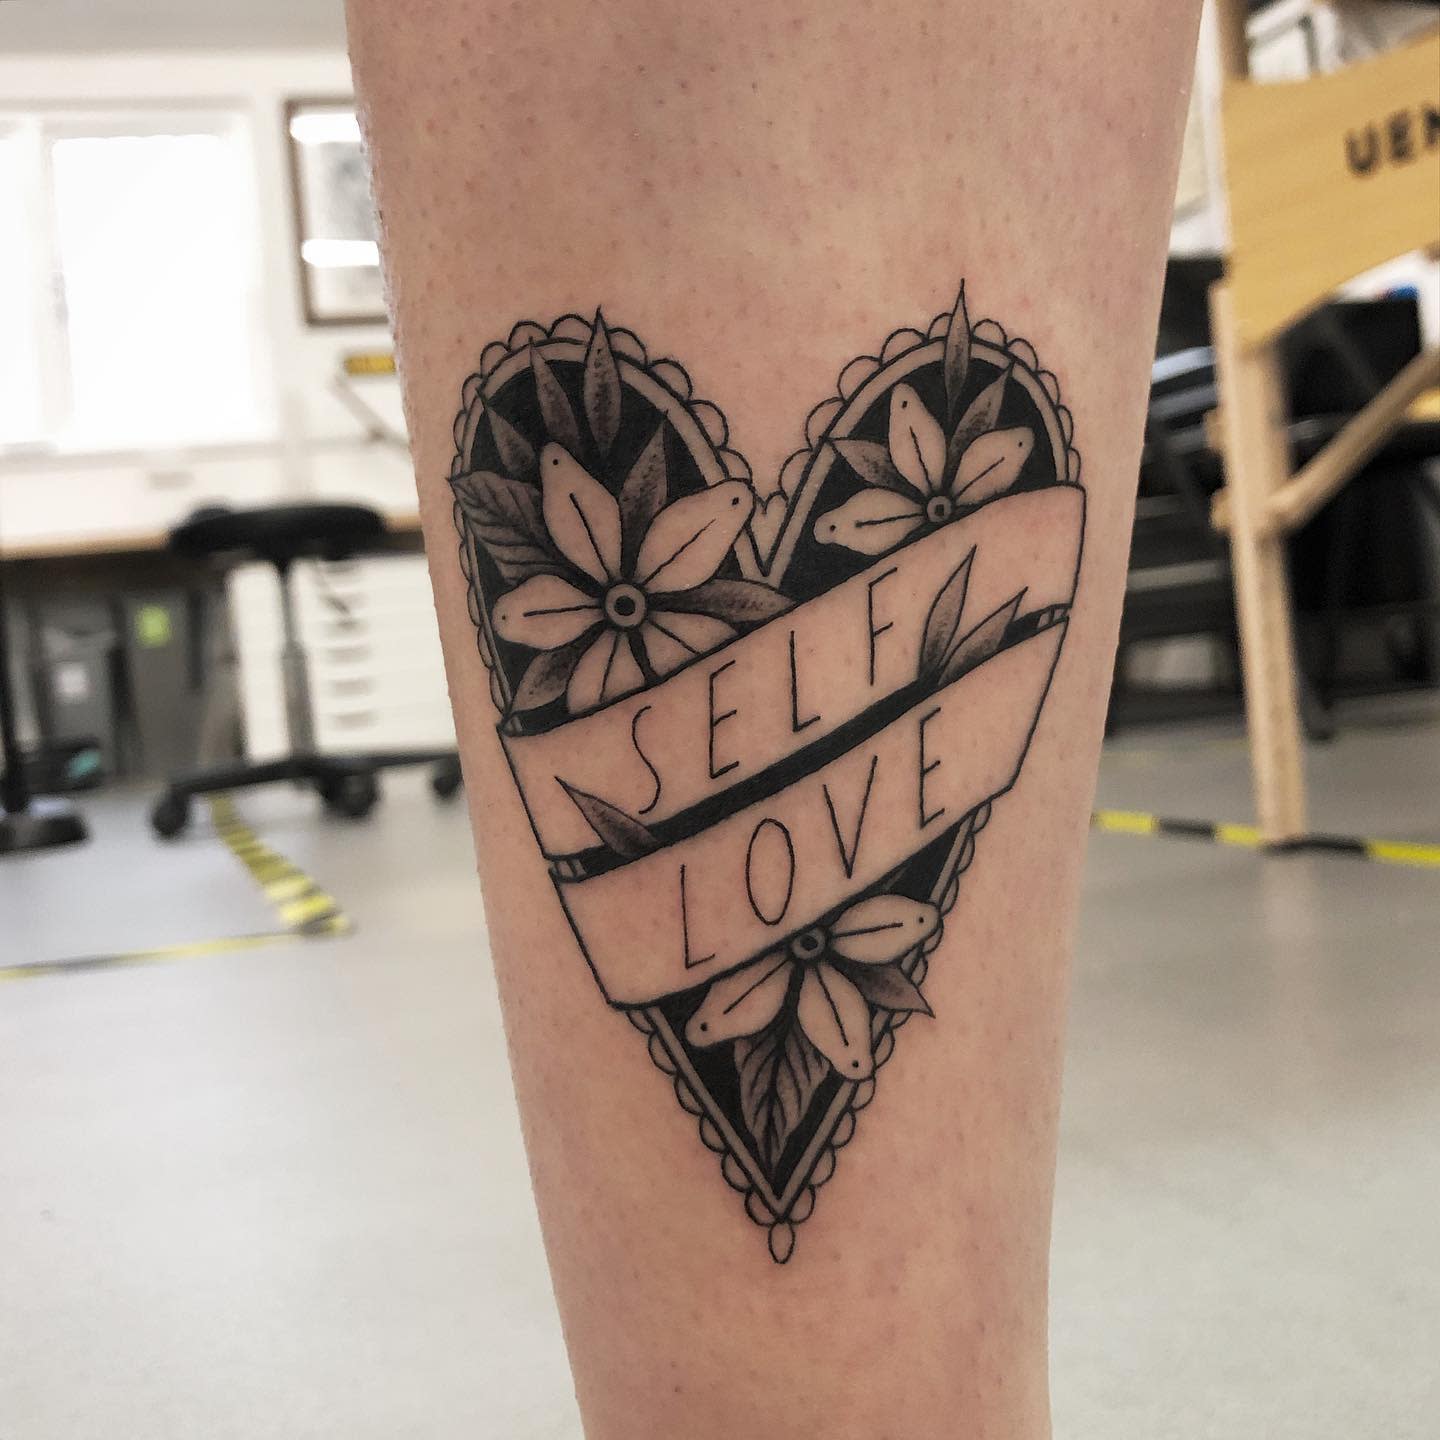 Self love heart tattoo - barbielongfox